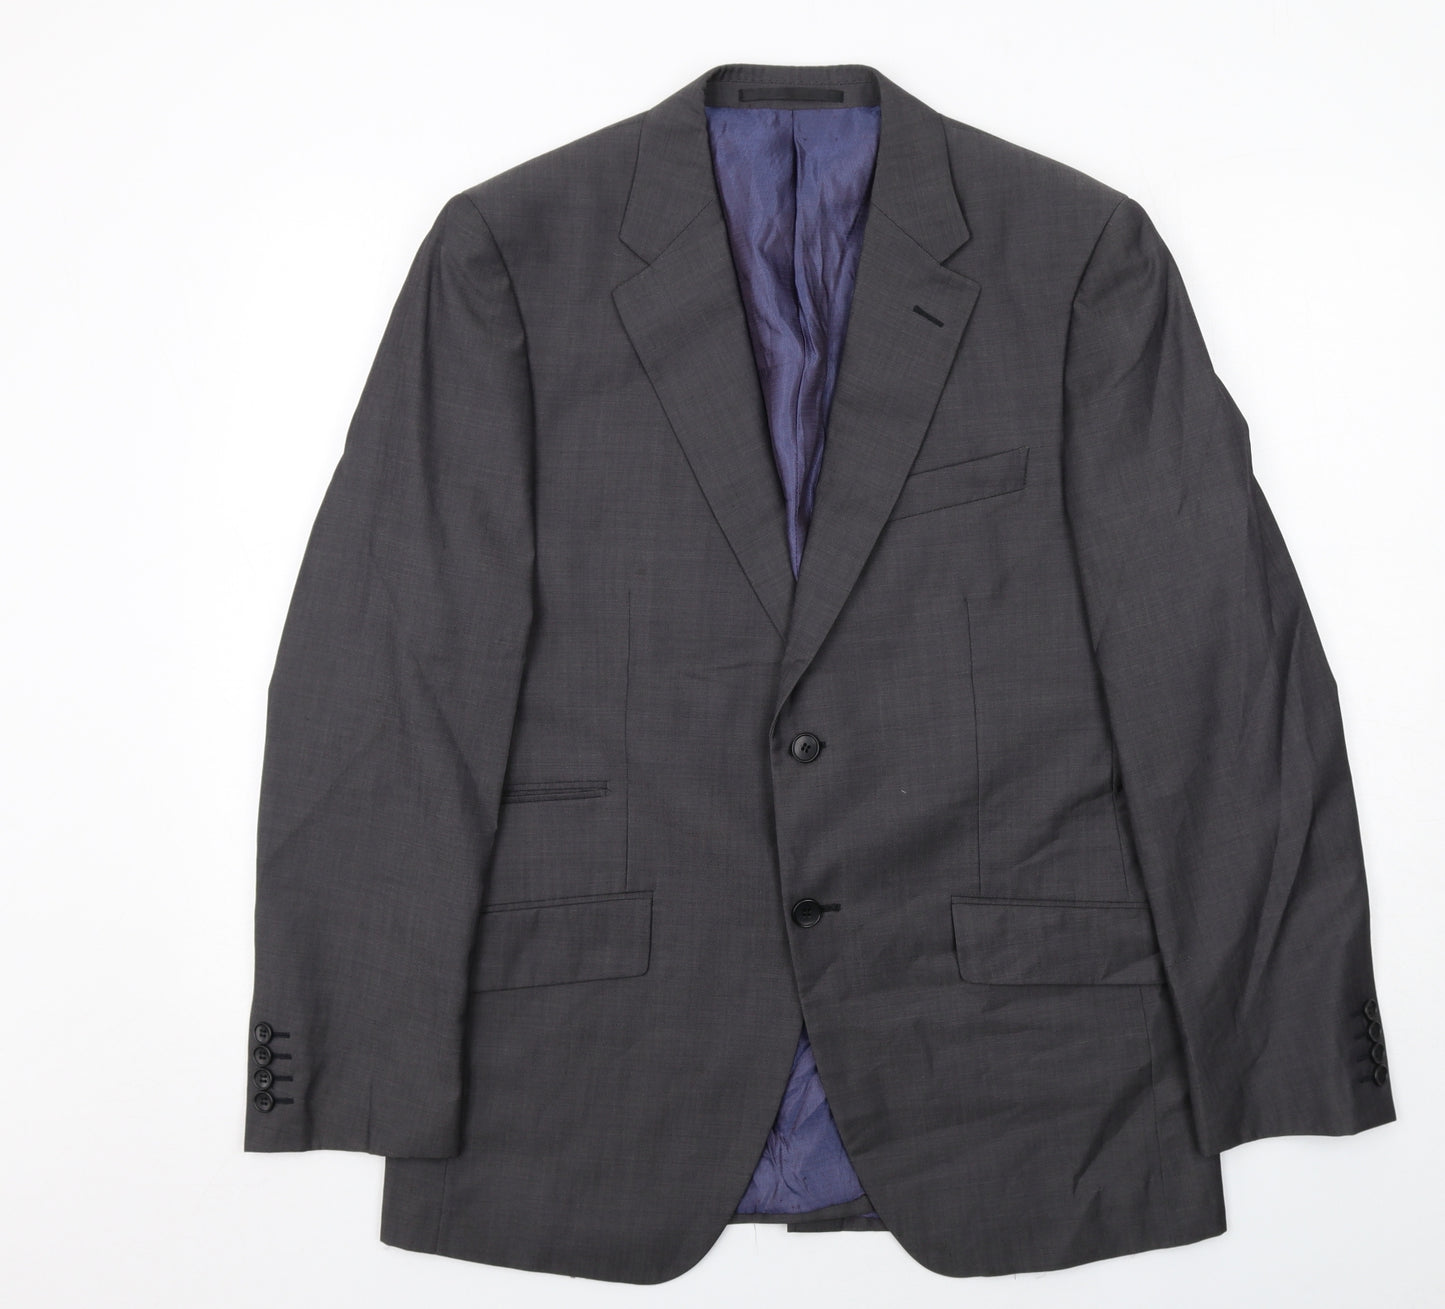 Autograph Mens Grey Polyester Jacket Suit Jacket Size 40 Regular